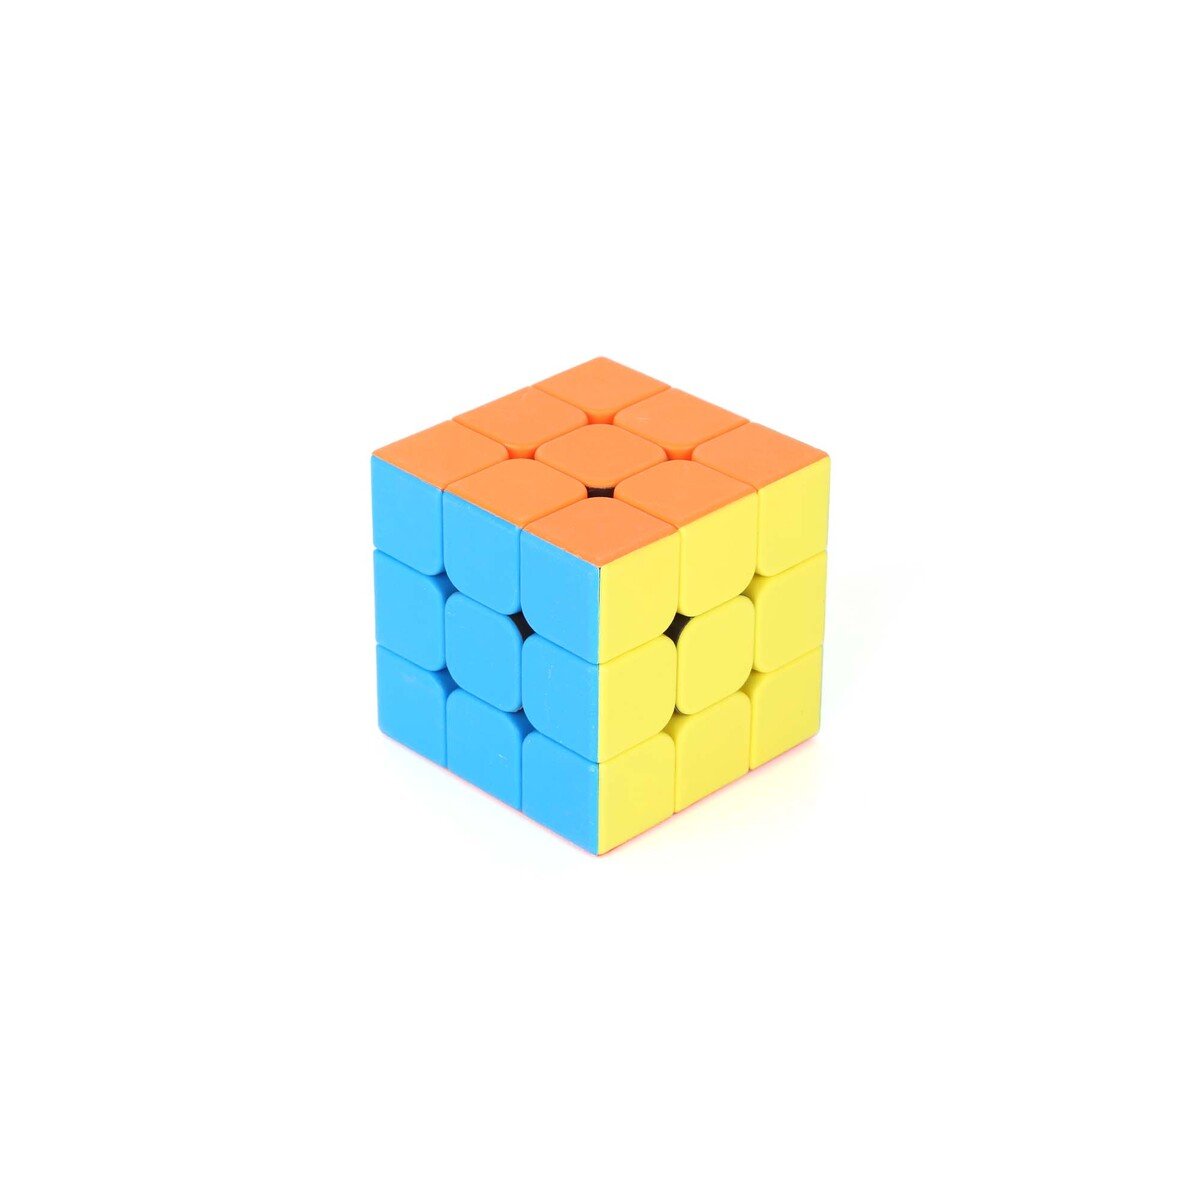  Rubik's Cube 3x3